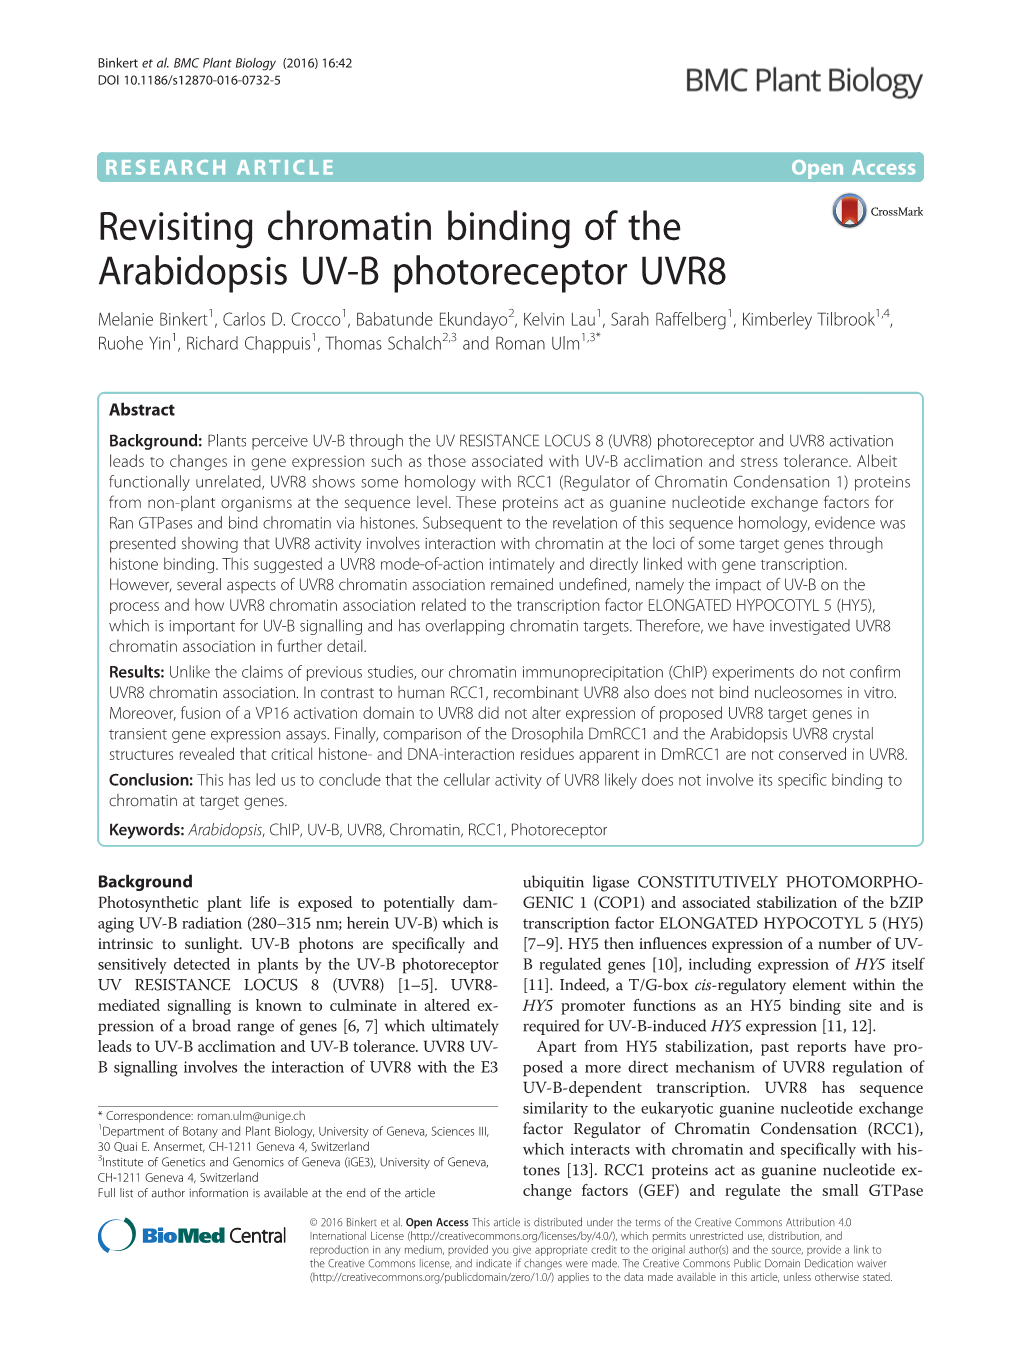 Revisiting Chromatin Binding of the Arabidopsis UV-B Photoreceptor UVR8 Melanie Binkert1, Carlos D